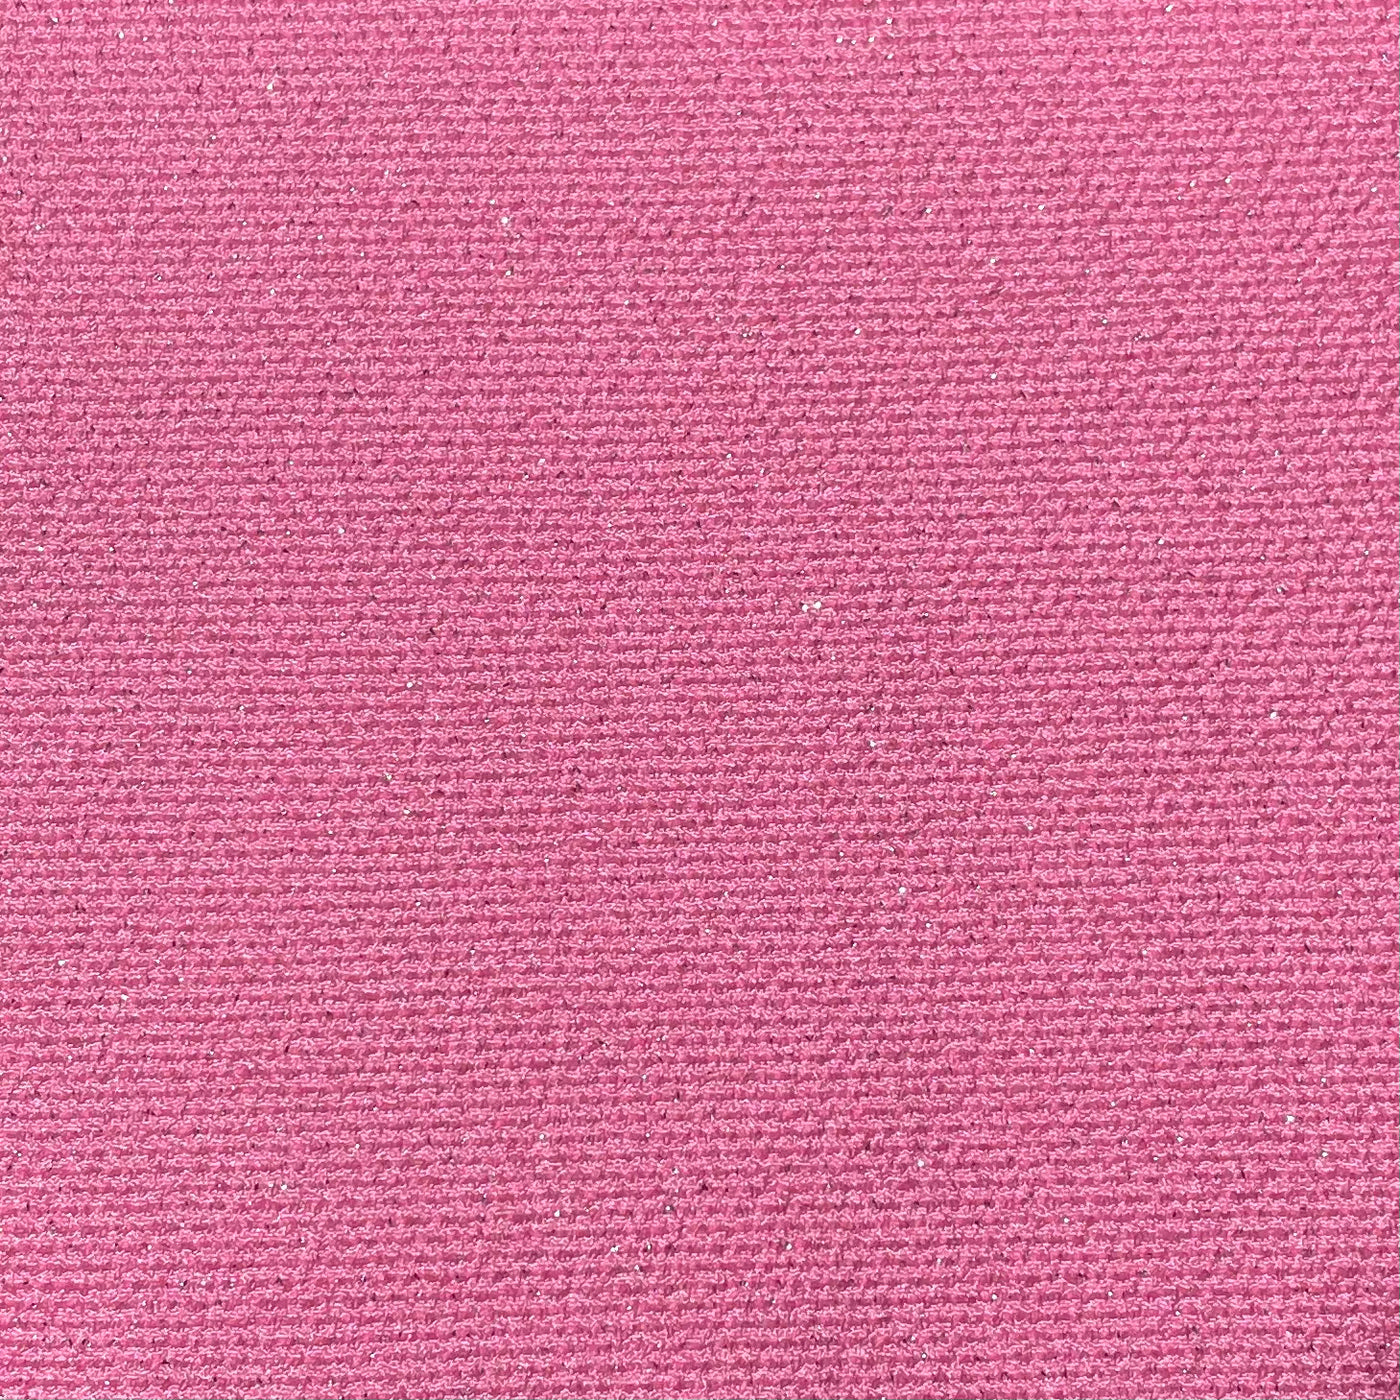 Entera Portofino pink bright reversible a rosado satinado